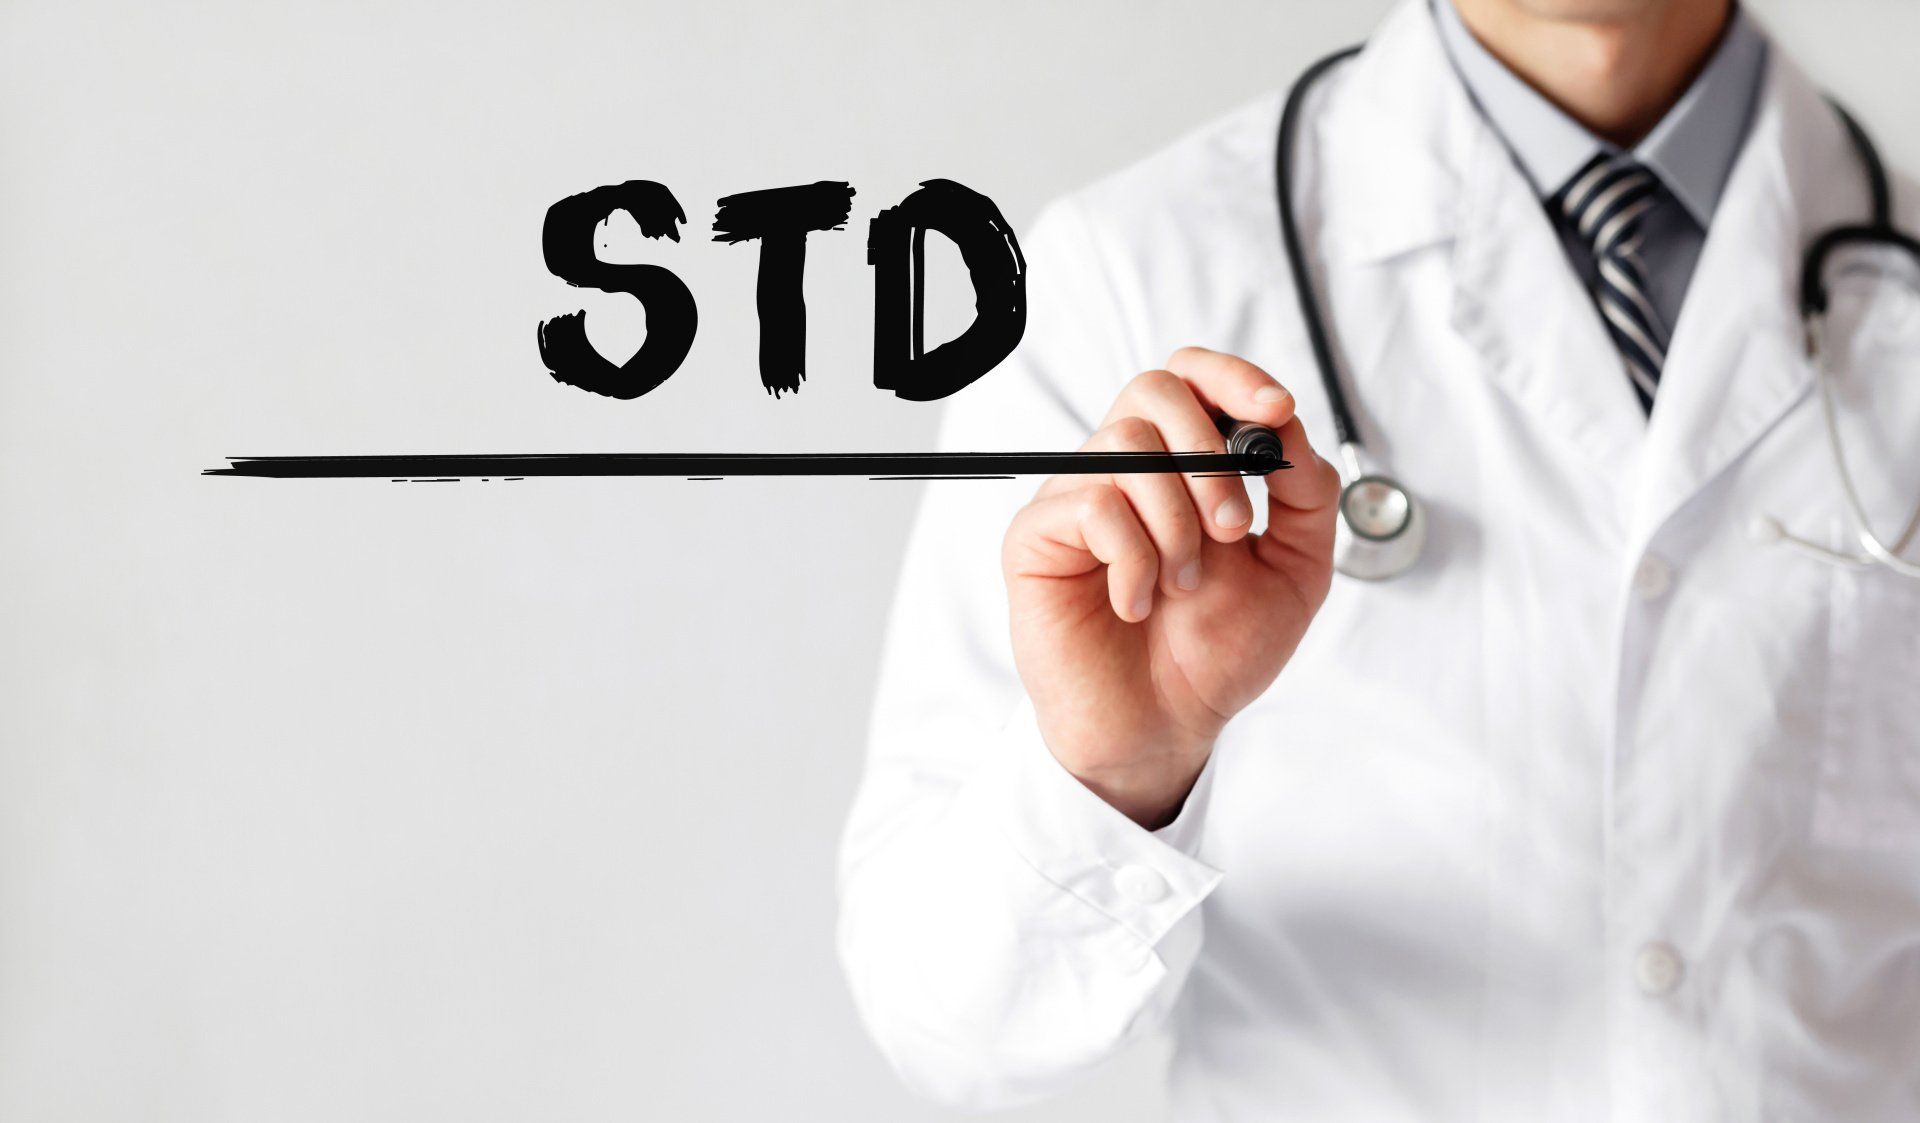 how often should i get an std test